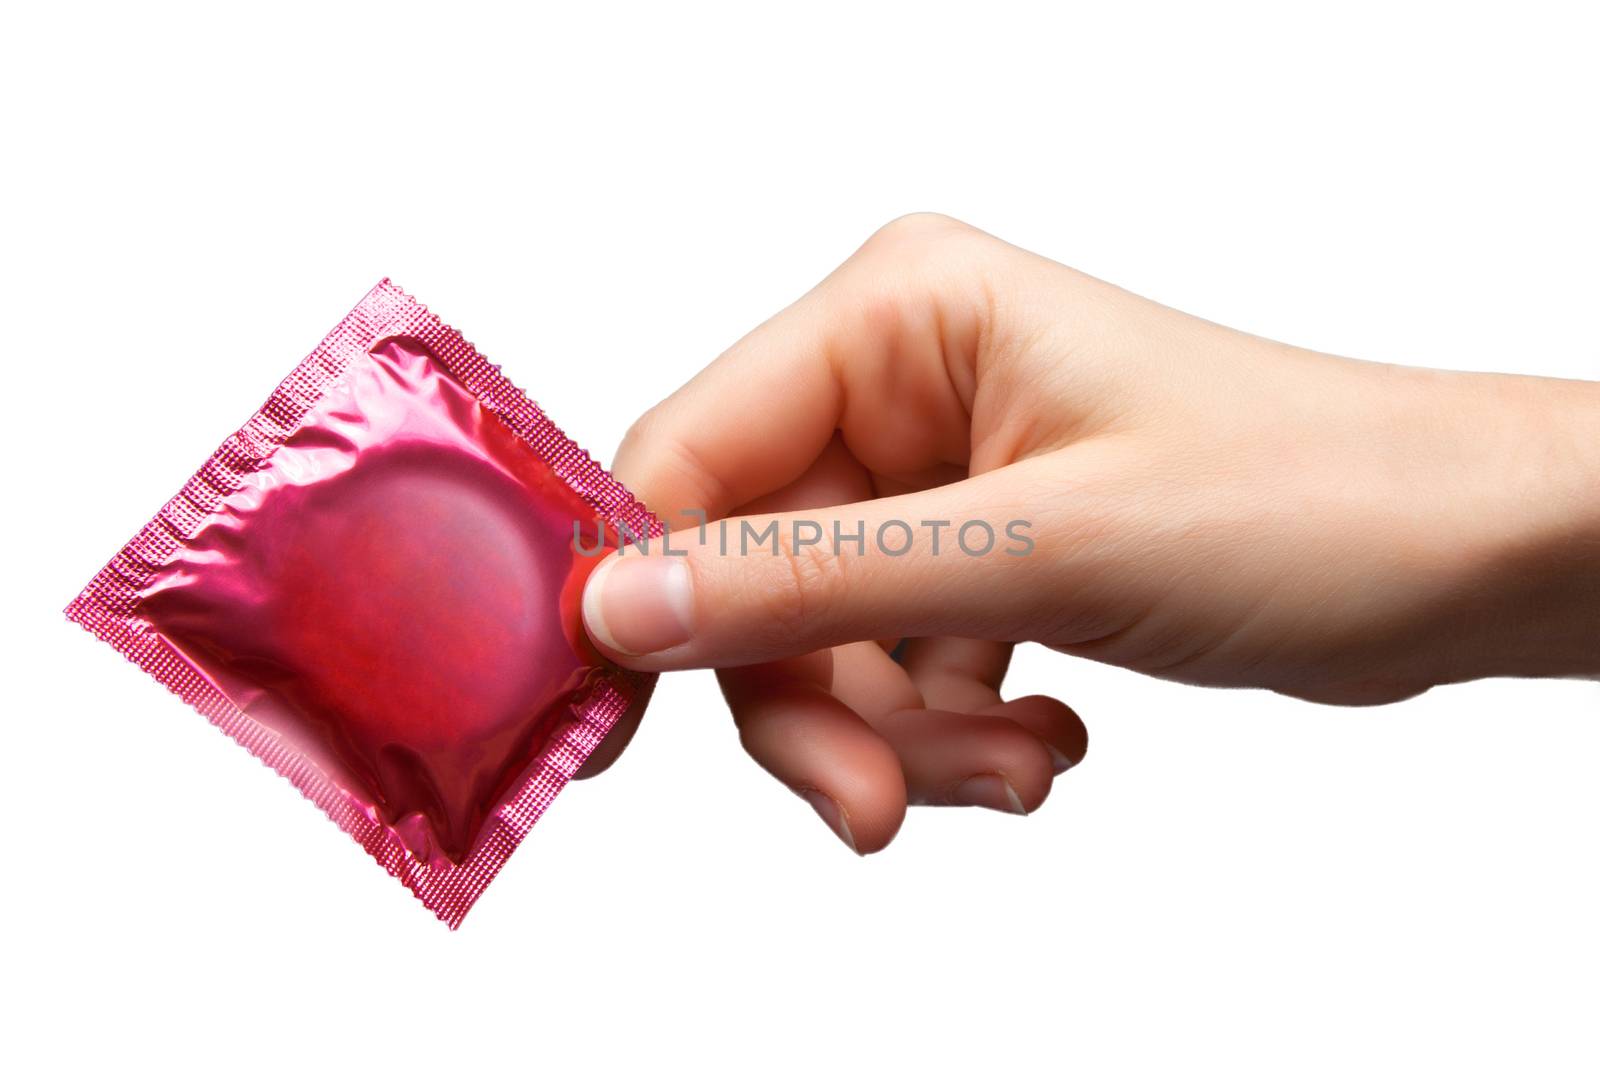 condom in hand by fotoru